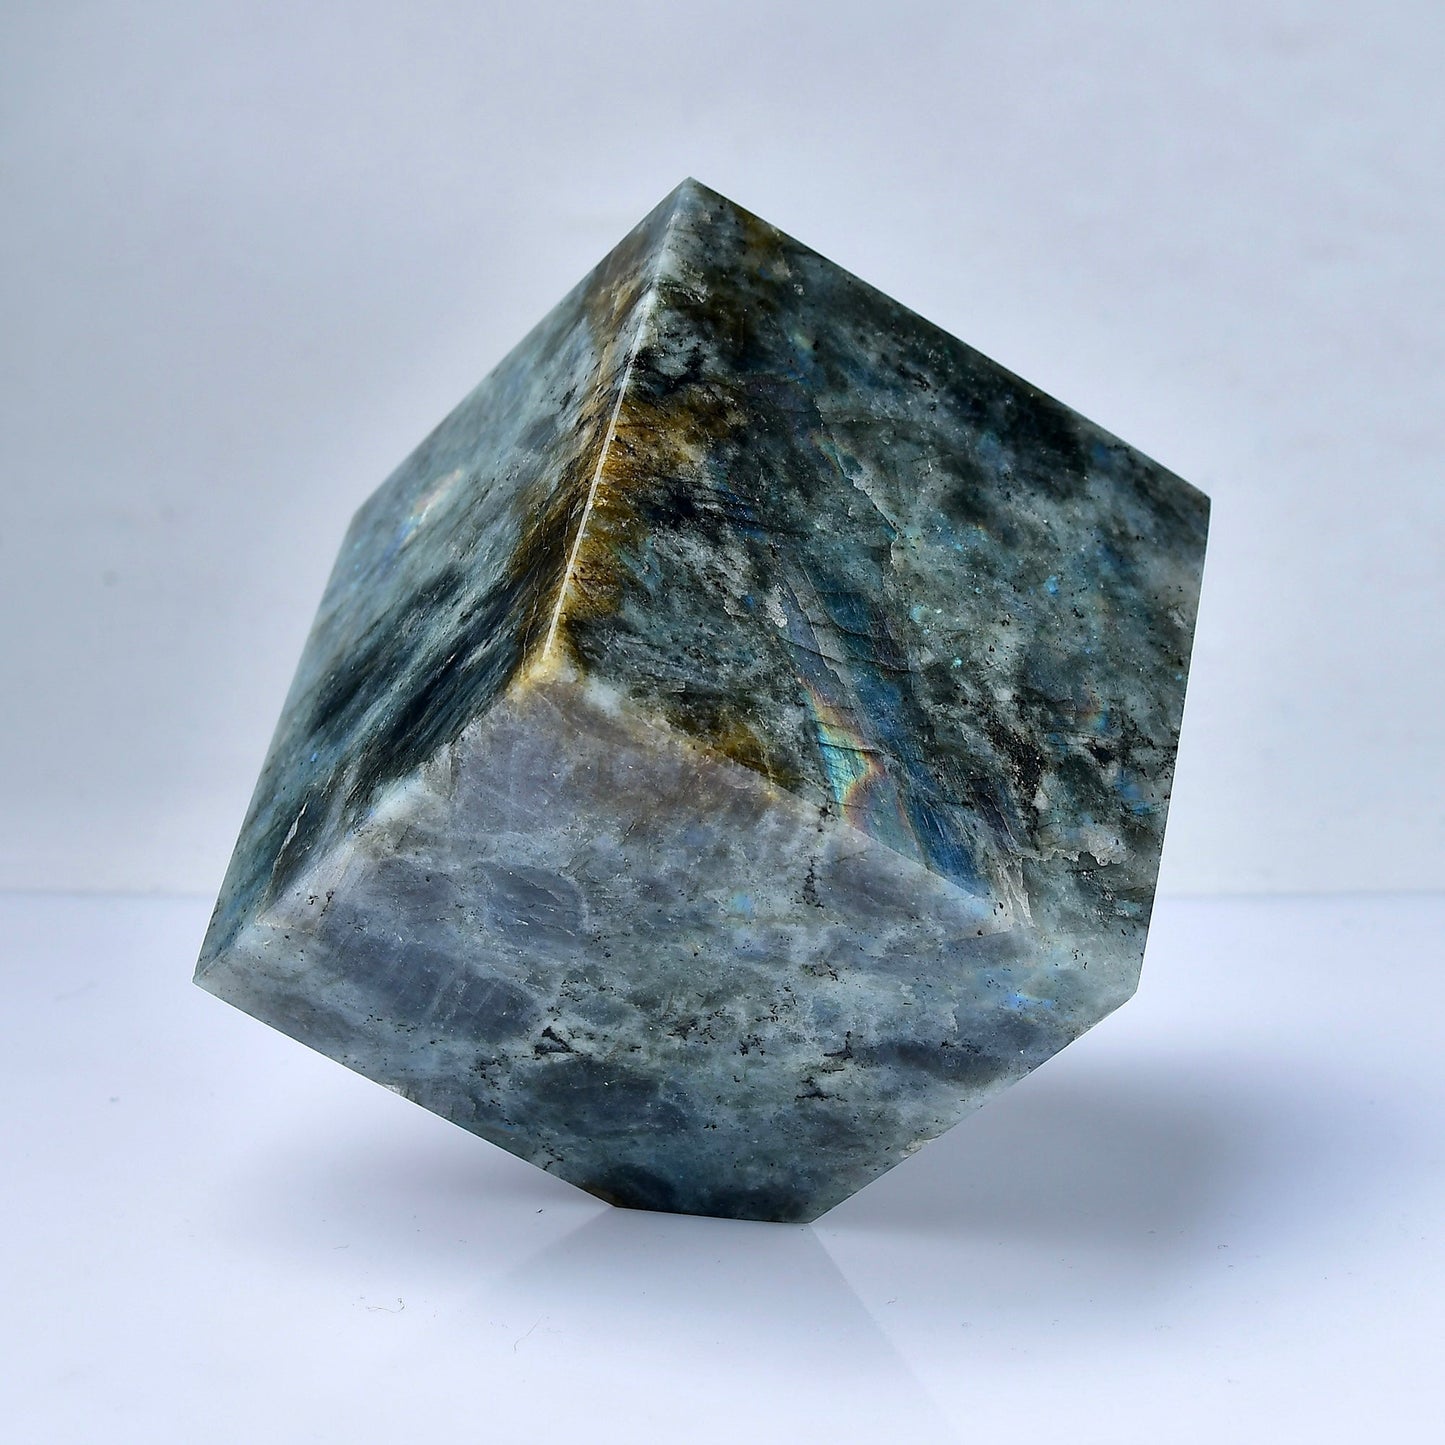 Self-Standing Natural Labradorite Cube Crystal Stone